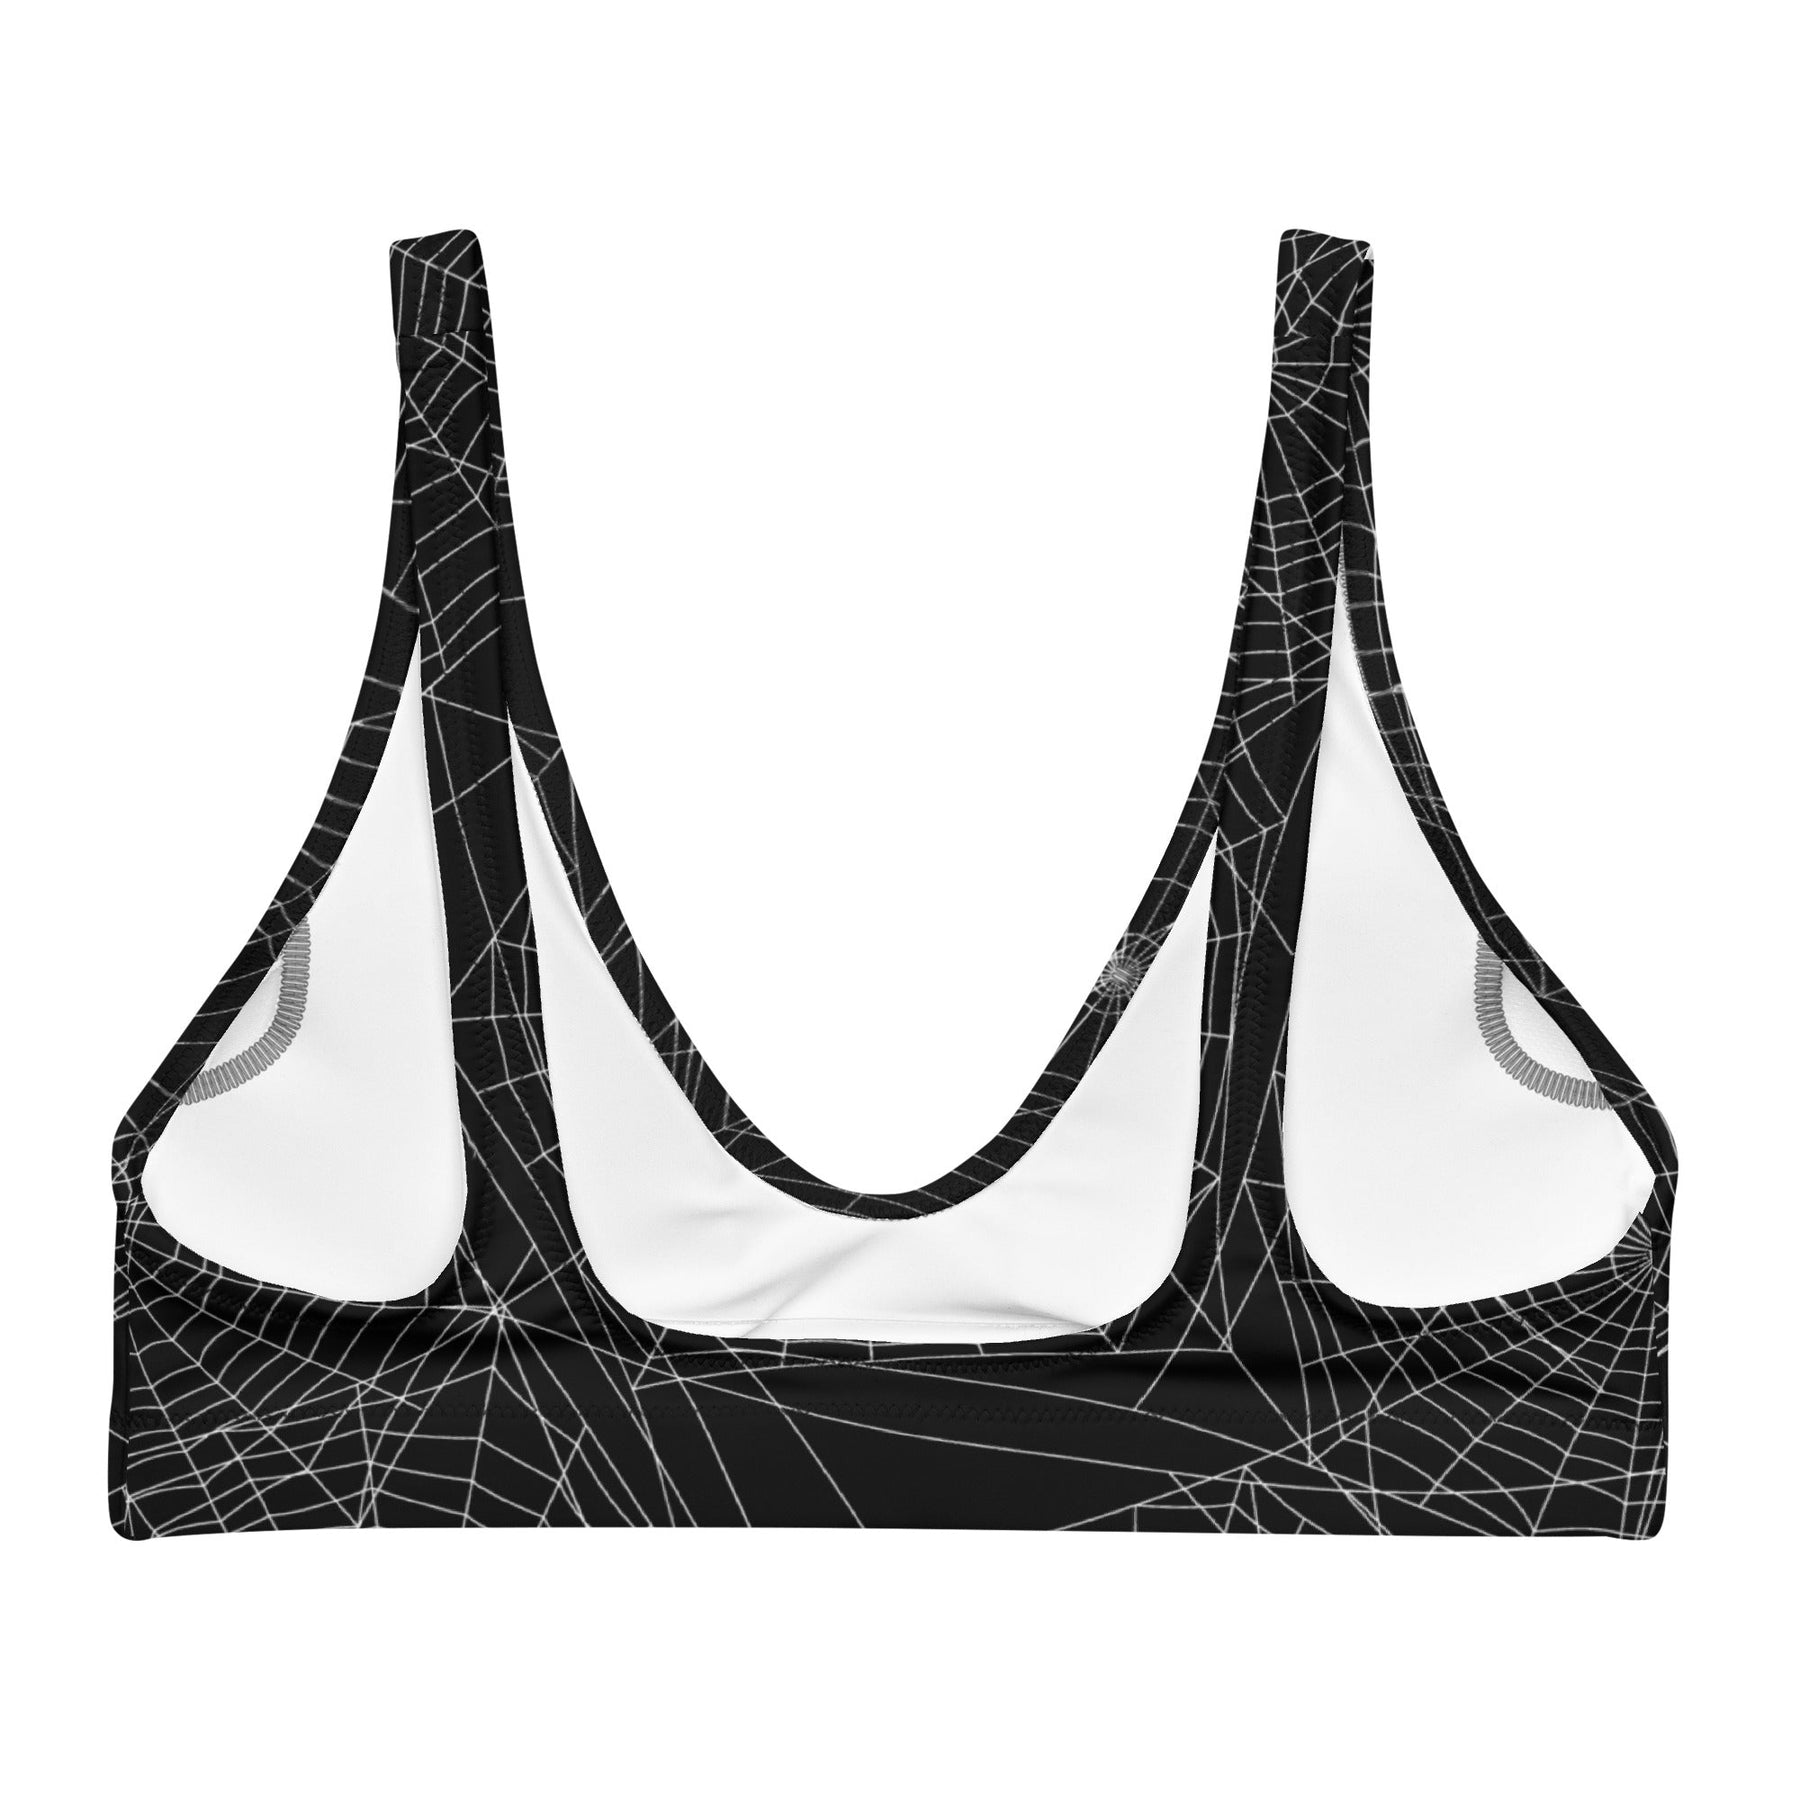 Spider Chic Sport Bikini Top (Ready to Ship) - Goth Cloth Co.5373487_1203A